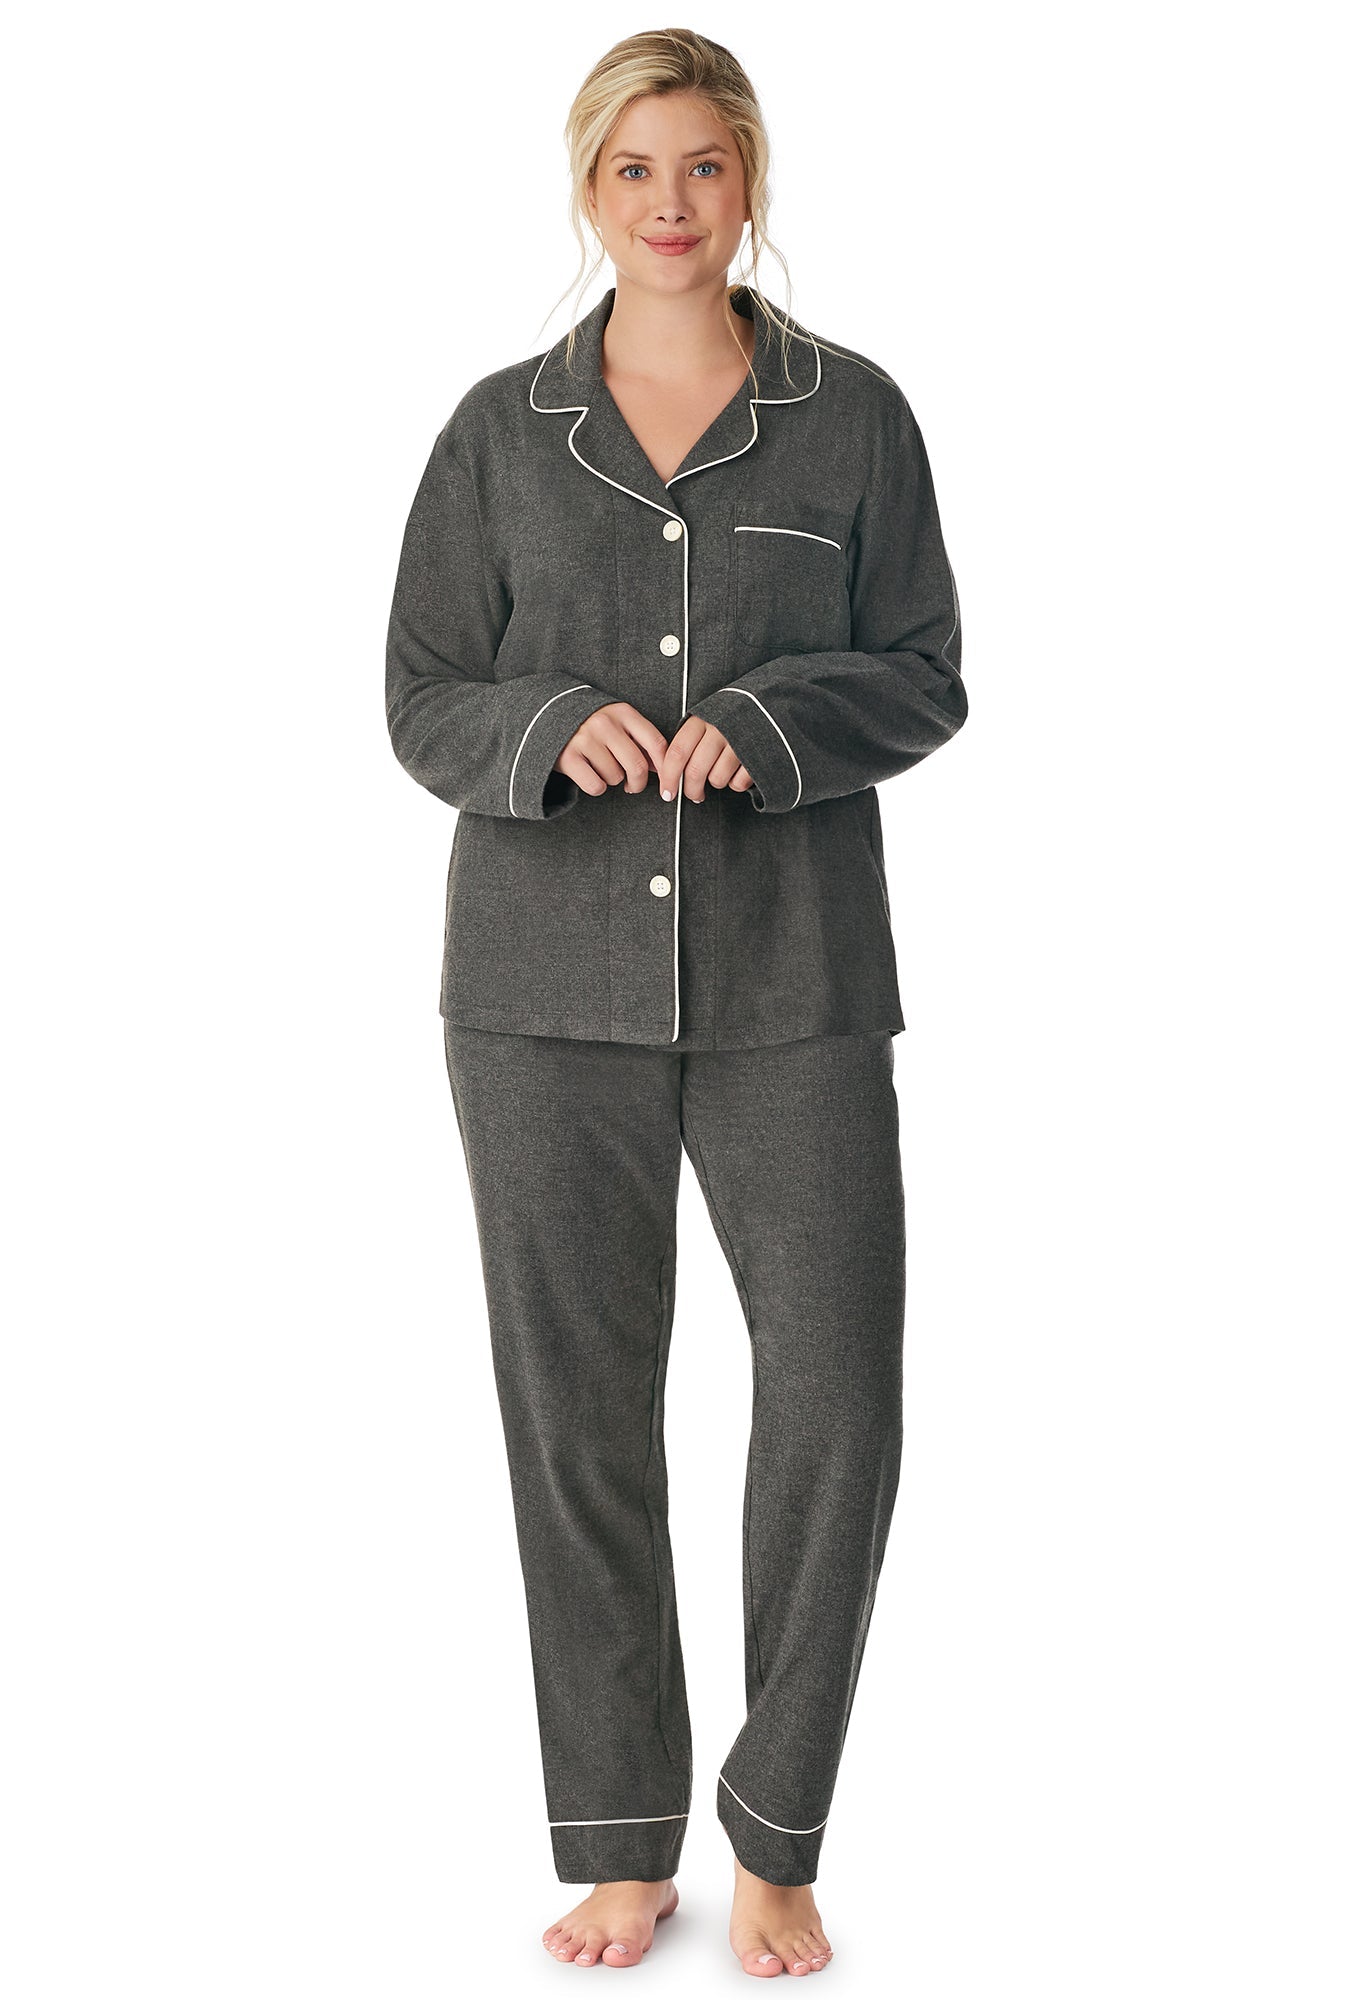 Women's Charcoal Grey Heather Long Sleeve Classic Woven Cotton Flannel PJ Set